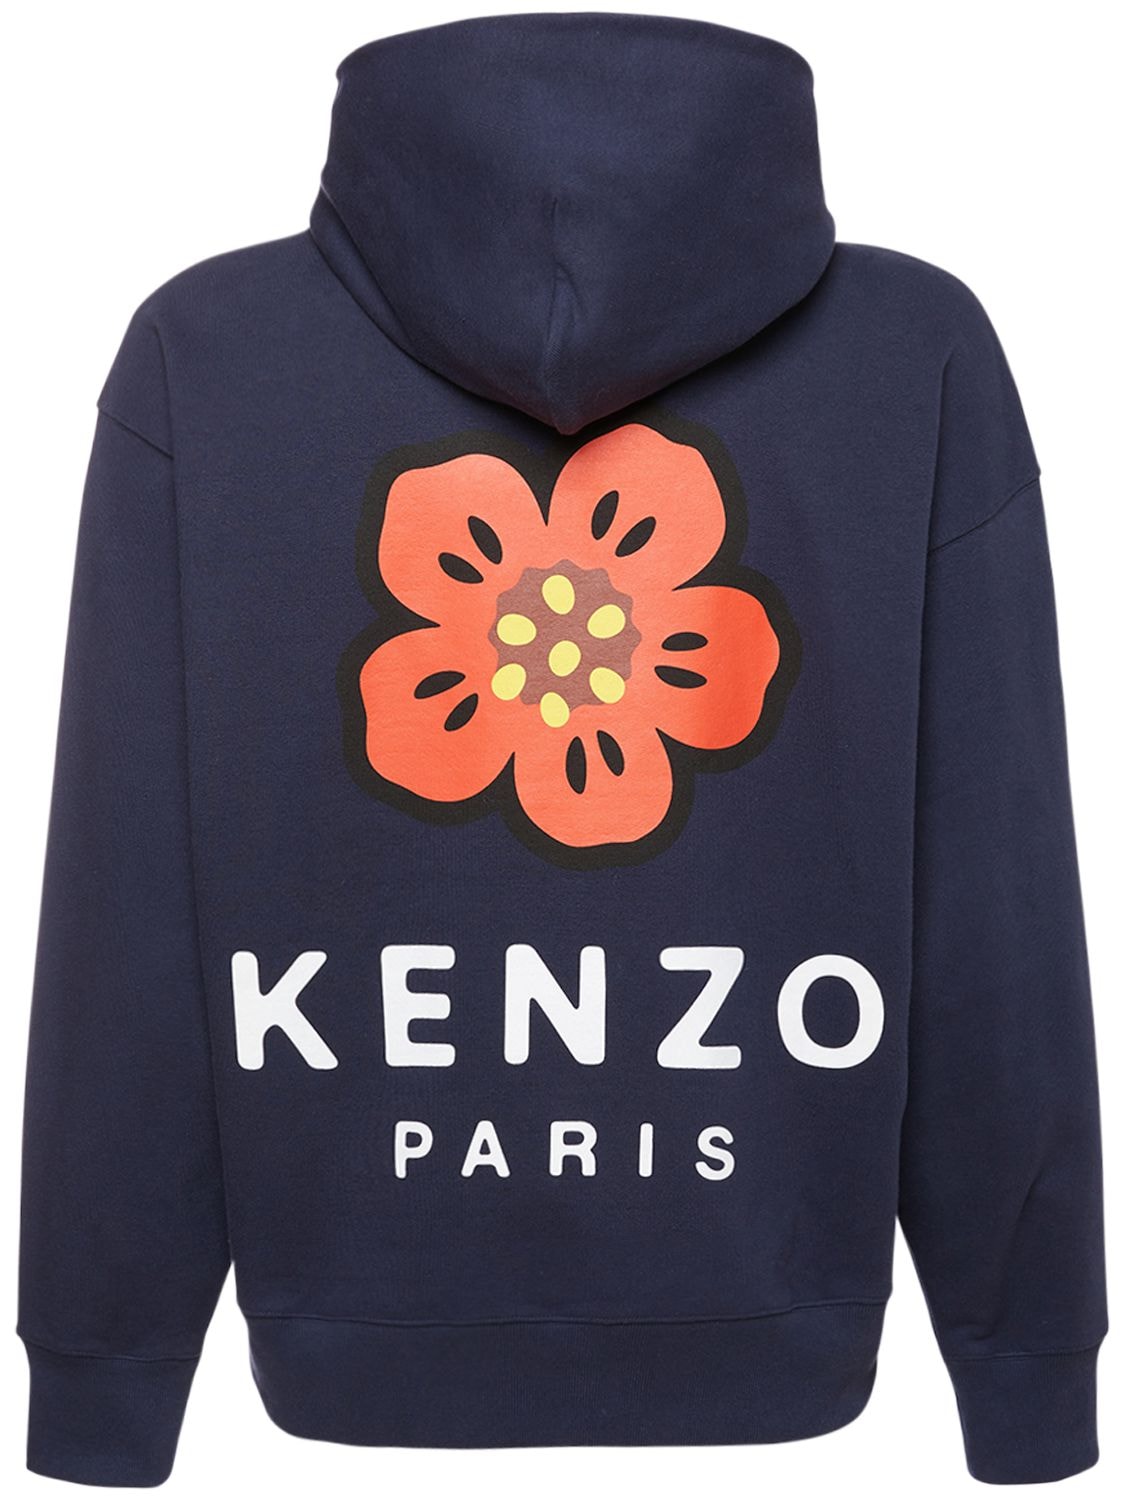 Kenzo x Nigo Boke Flower Oversized Hoodie